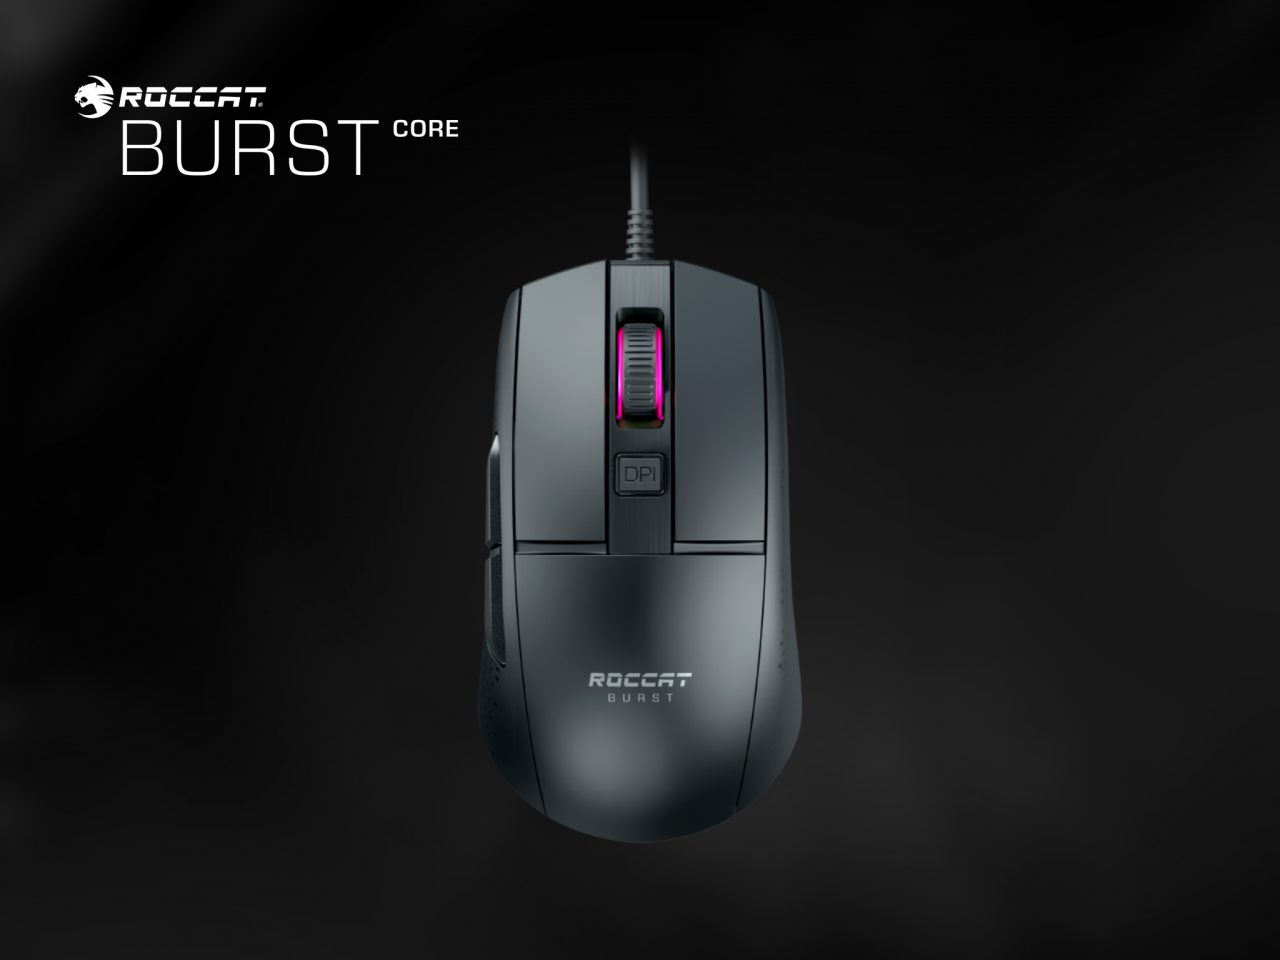 Burst Core Gaming Mouse (ROCCAT)